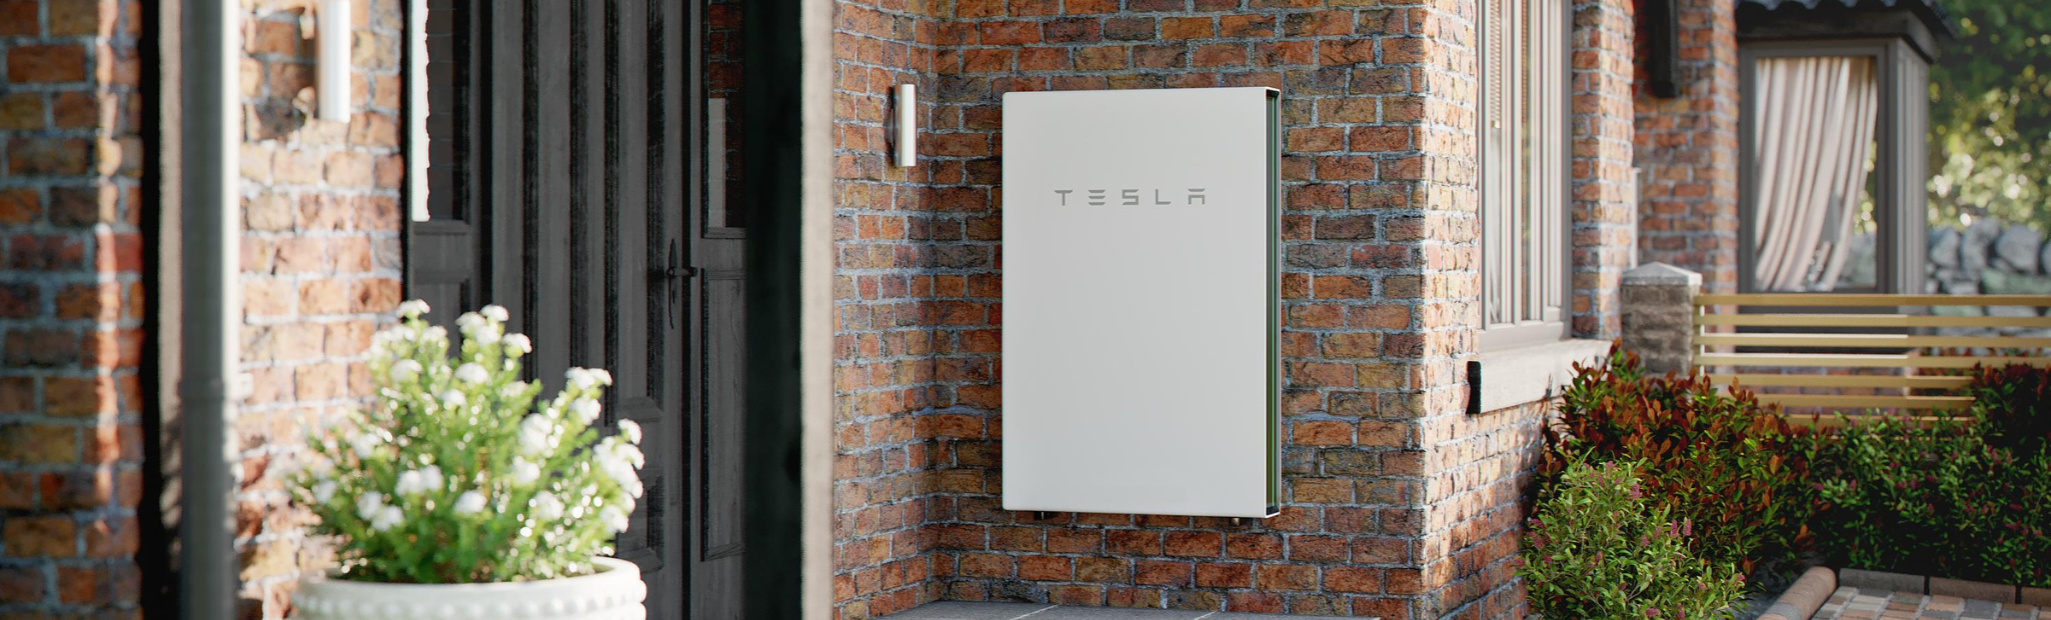 Tesla Powerwall Mrcharger Fullwidth